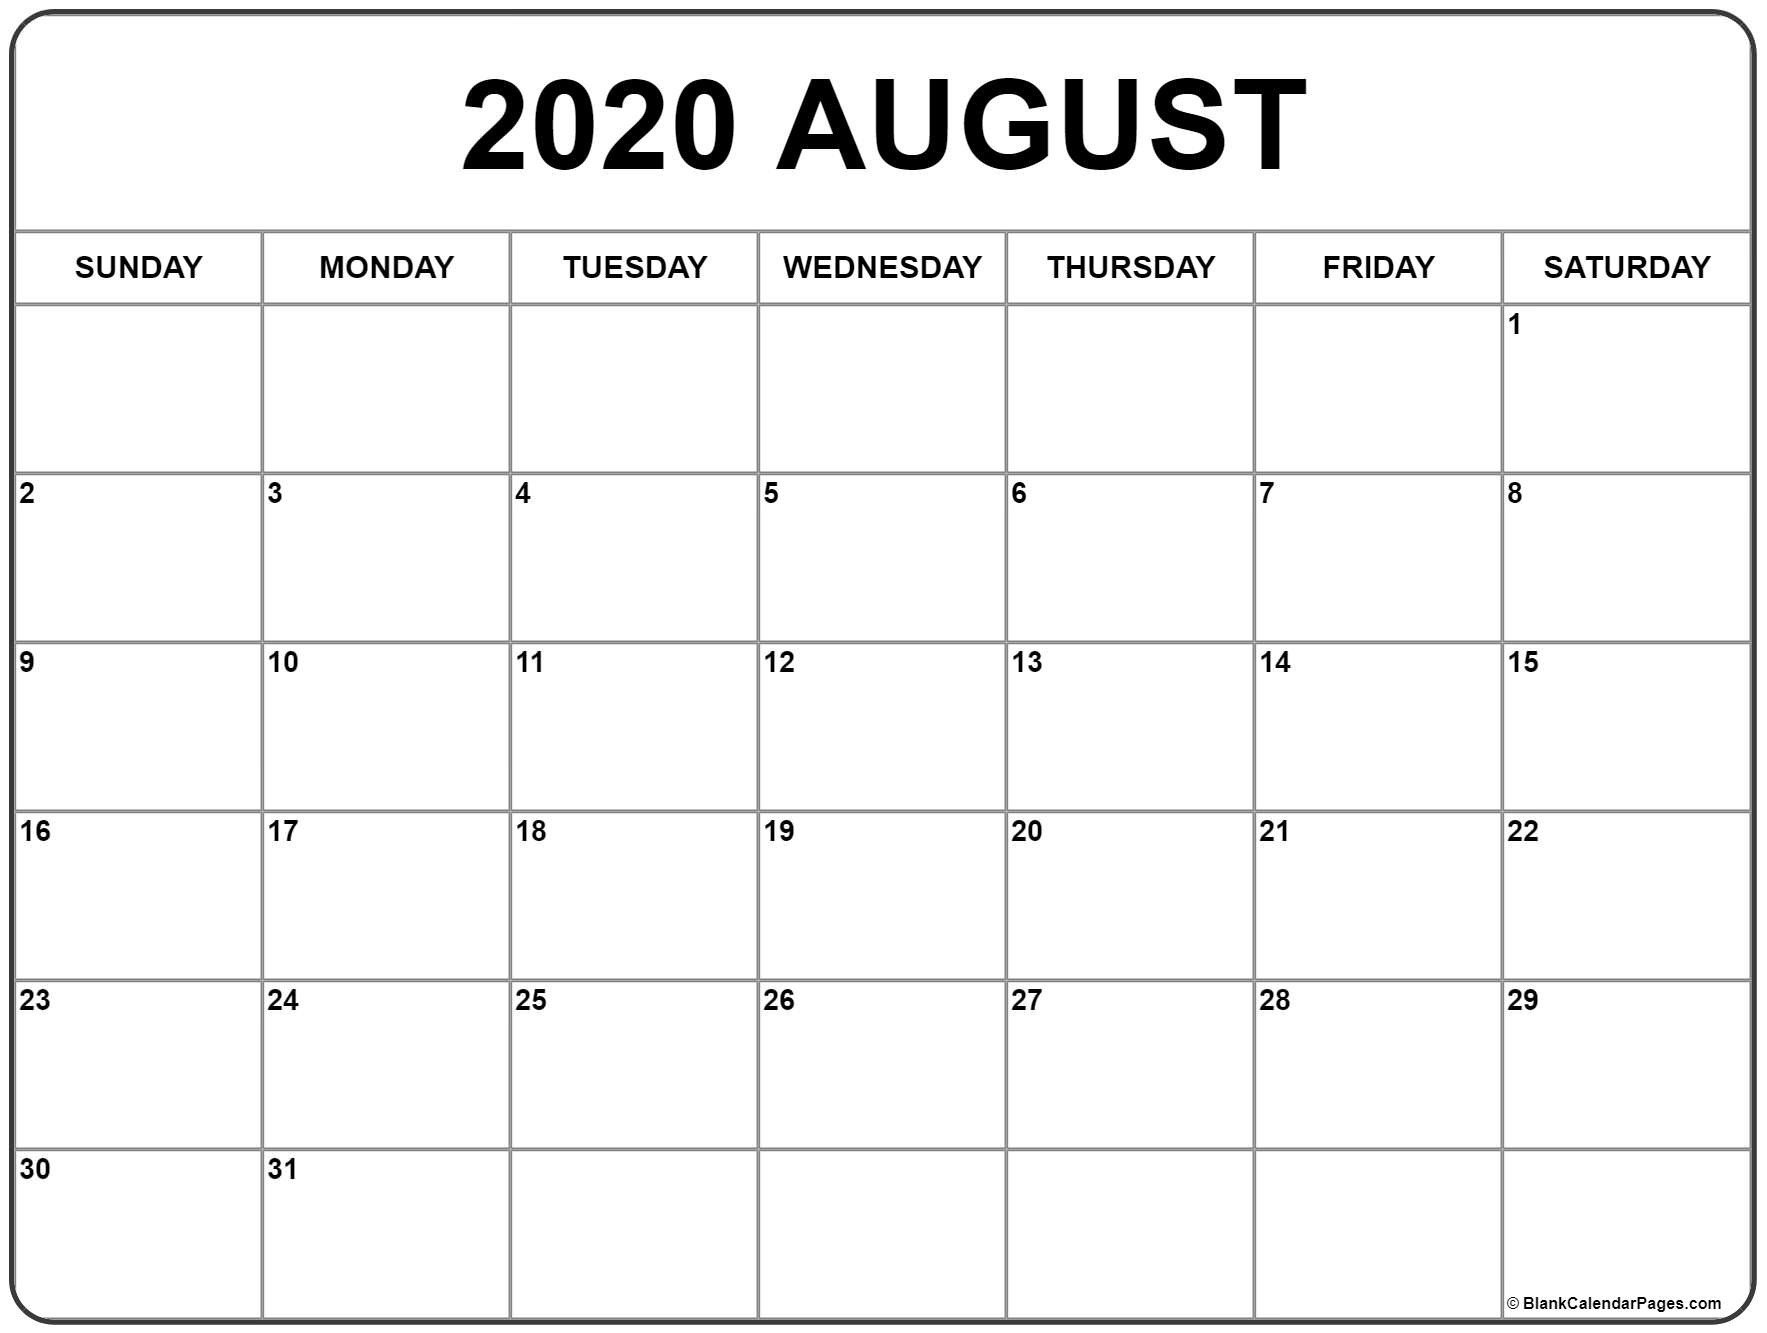 August 2020 Calendar | Free Printable Monthly Calendars-Blank July And August Calendar 2020